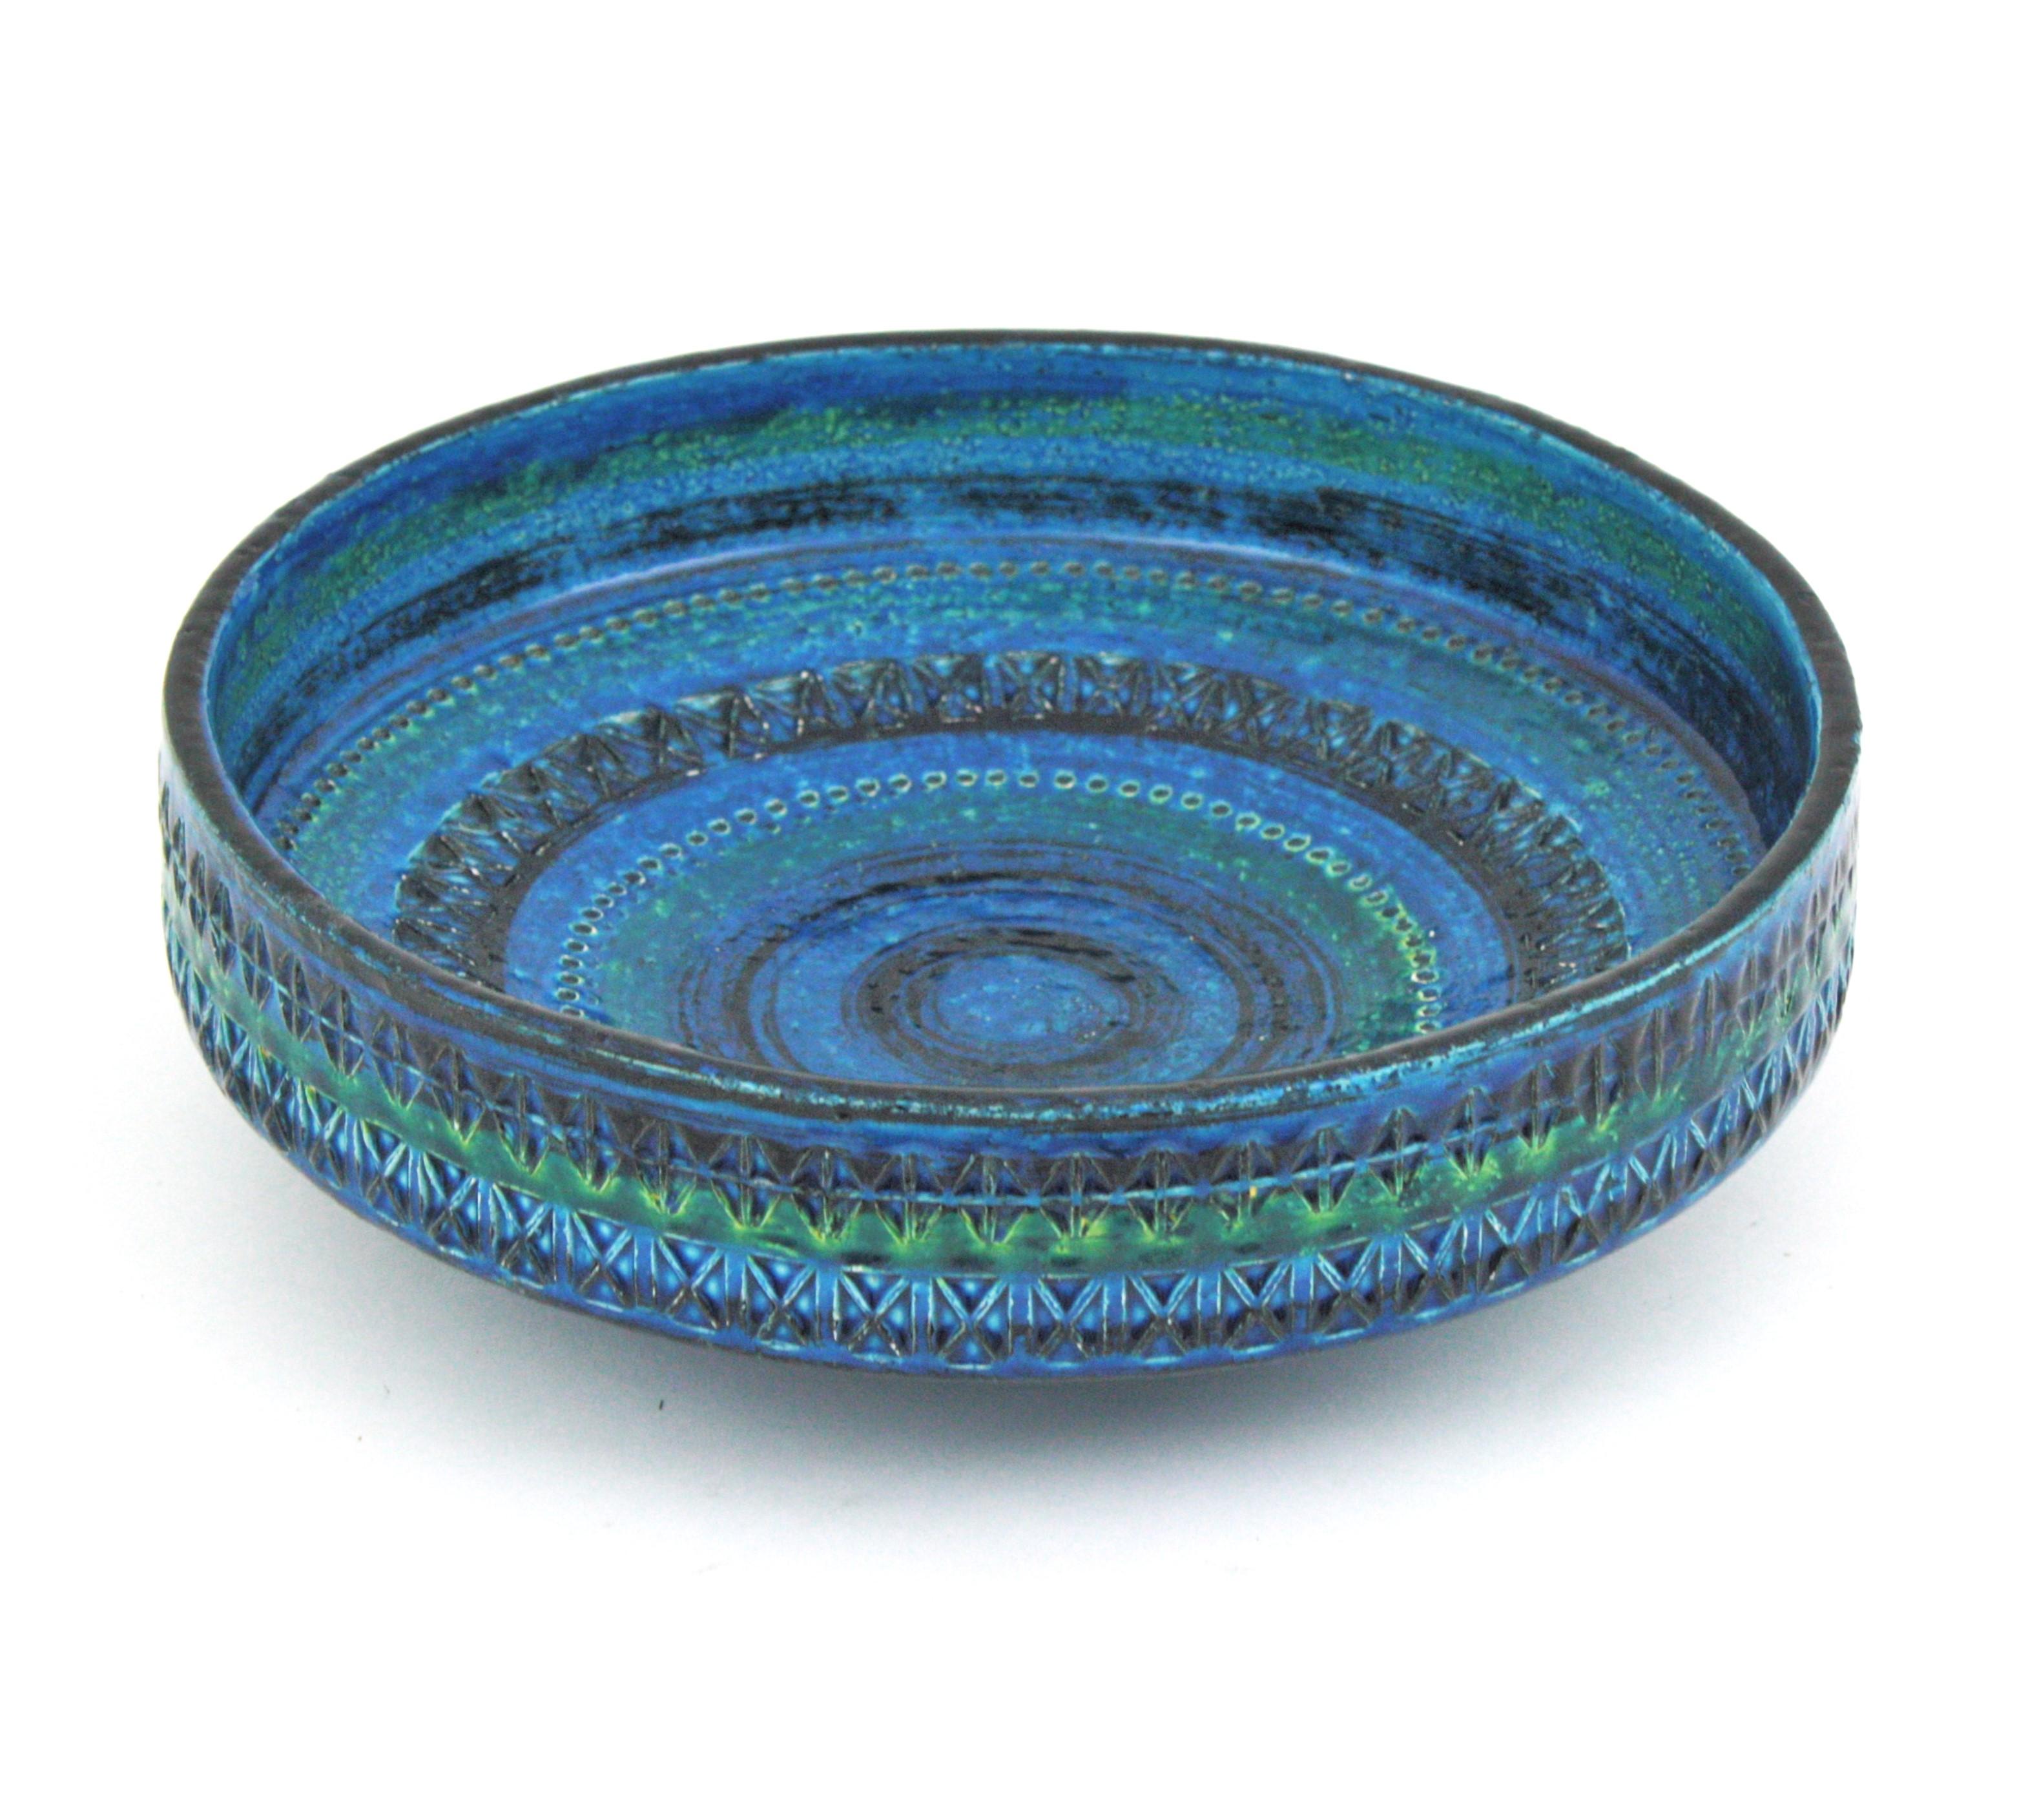 Italian midcentury Aldo Londi Bitossi Rimini blue ceramic centerpiece bowl, Italy, 1950-1960s.
Unusual large scale 14,17 in diameter Mid-Century Modern blue glazed ceramic (Rimini Blu) round footed bowl / centerpiece.
Designed by Aldo Londi and